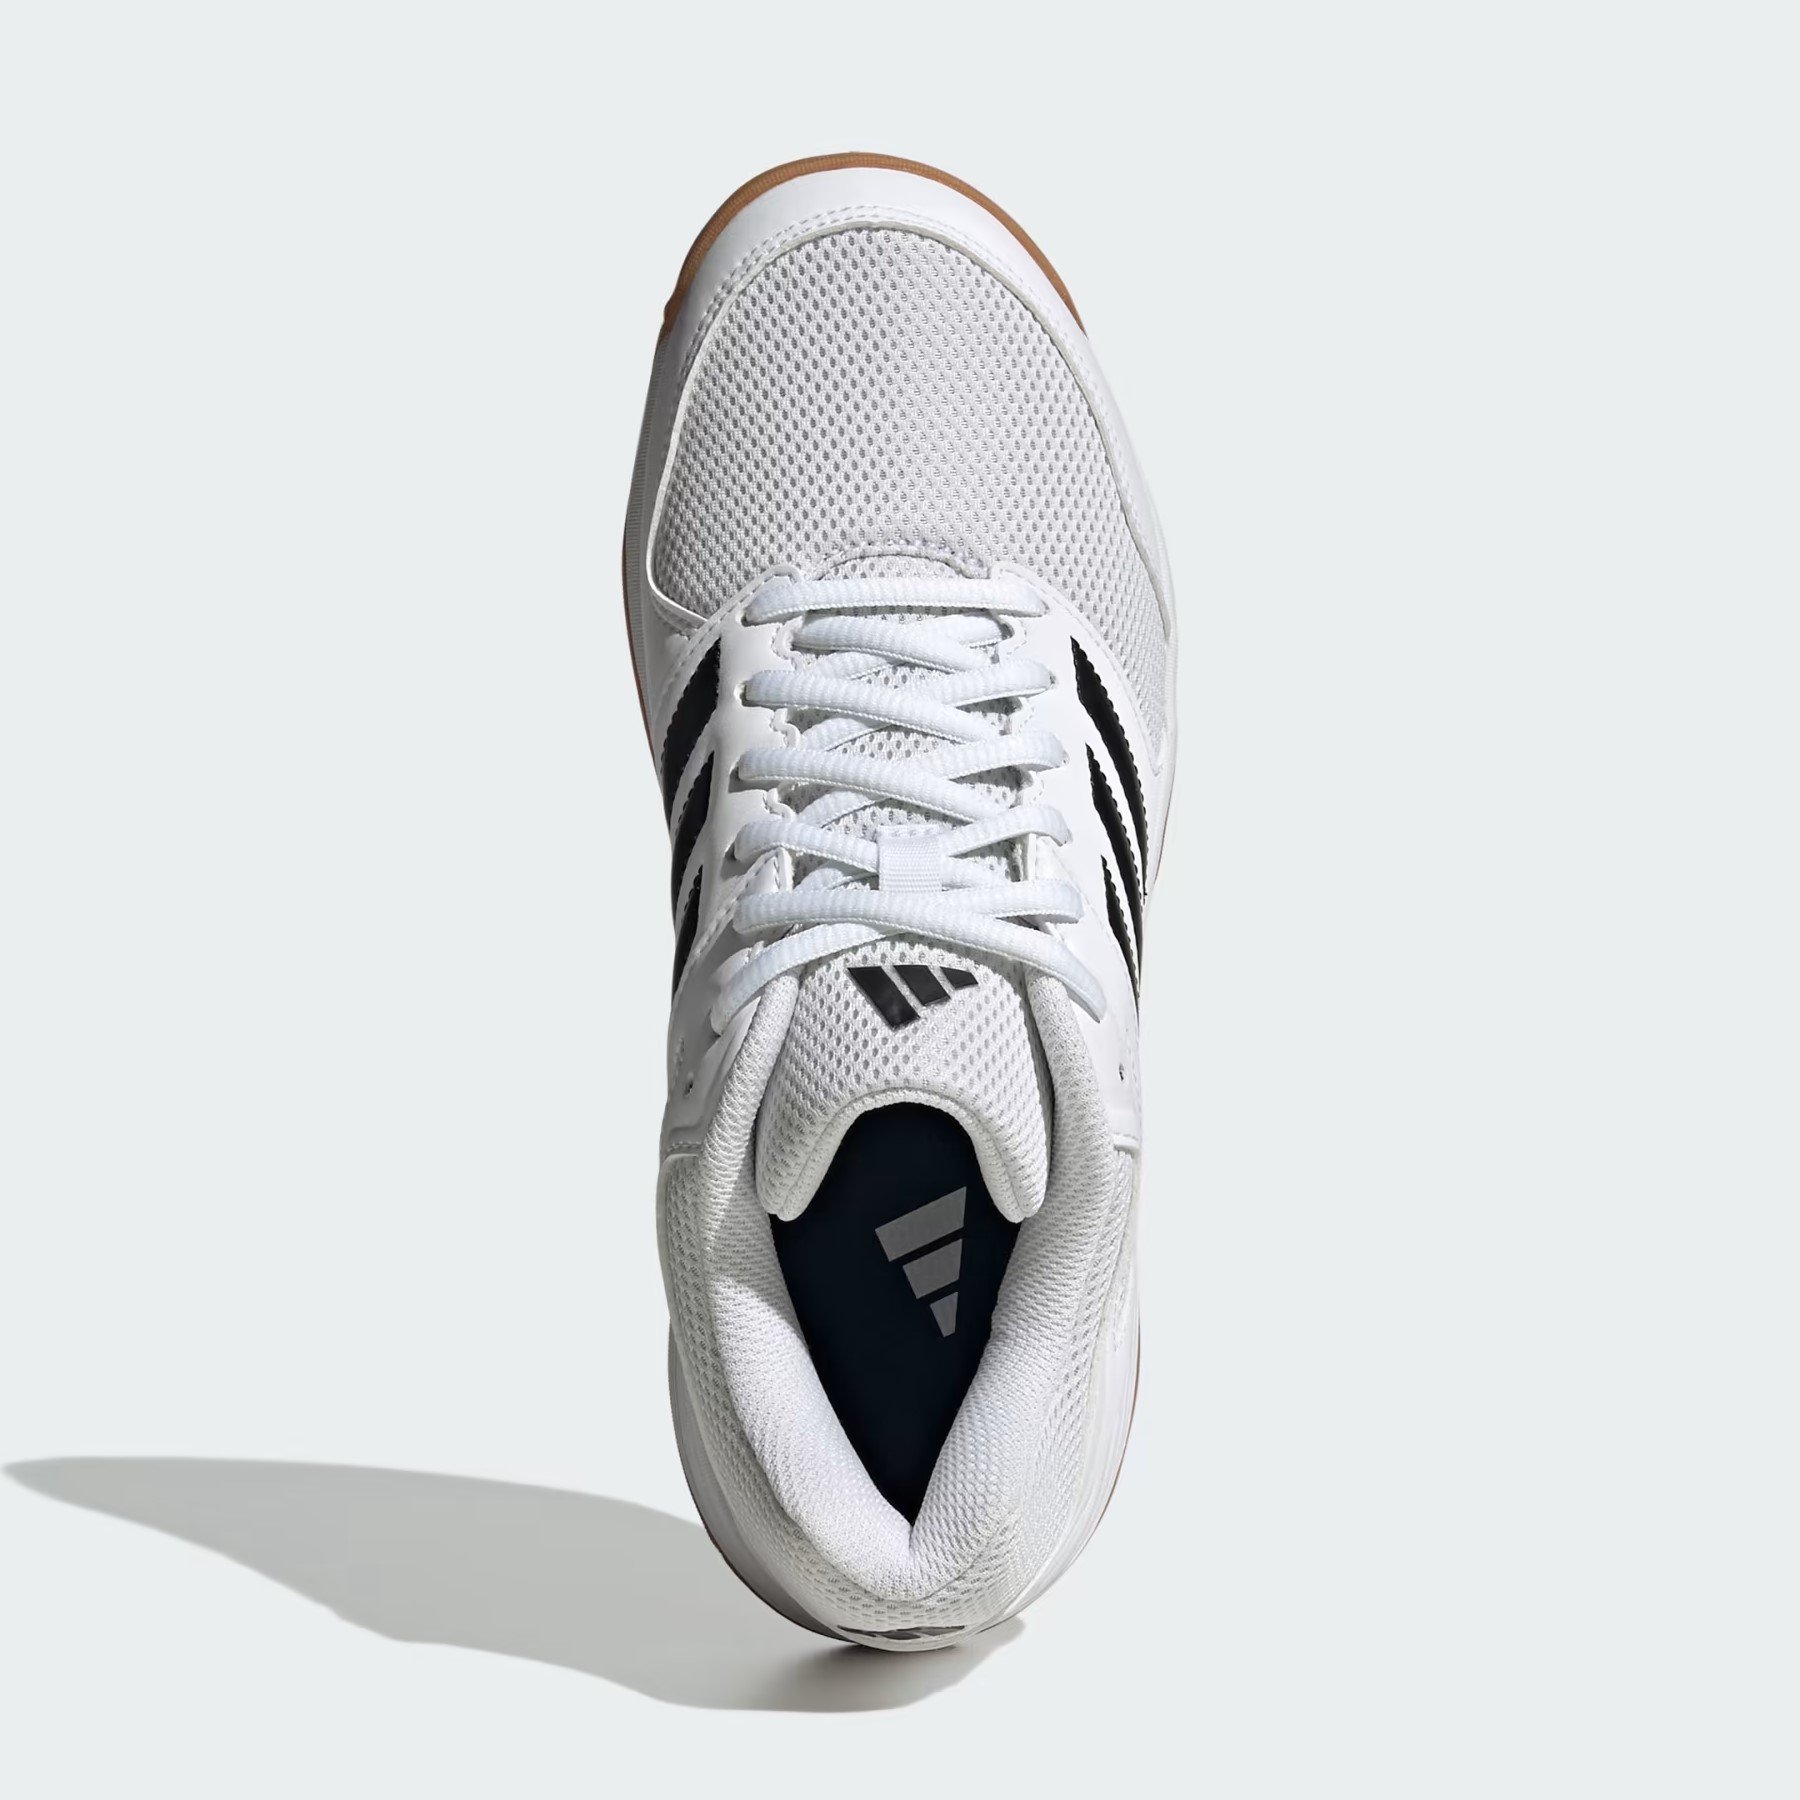 Obuv Adidas Speedcourt W - biela/čierna/hnedá